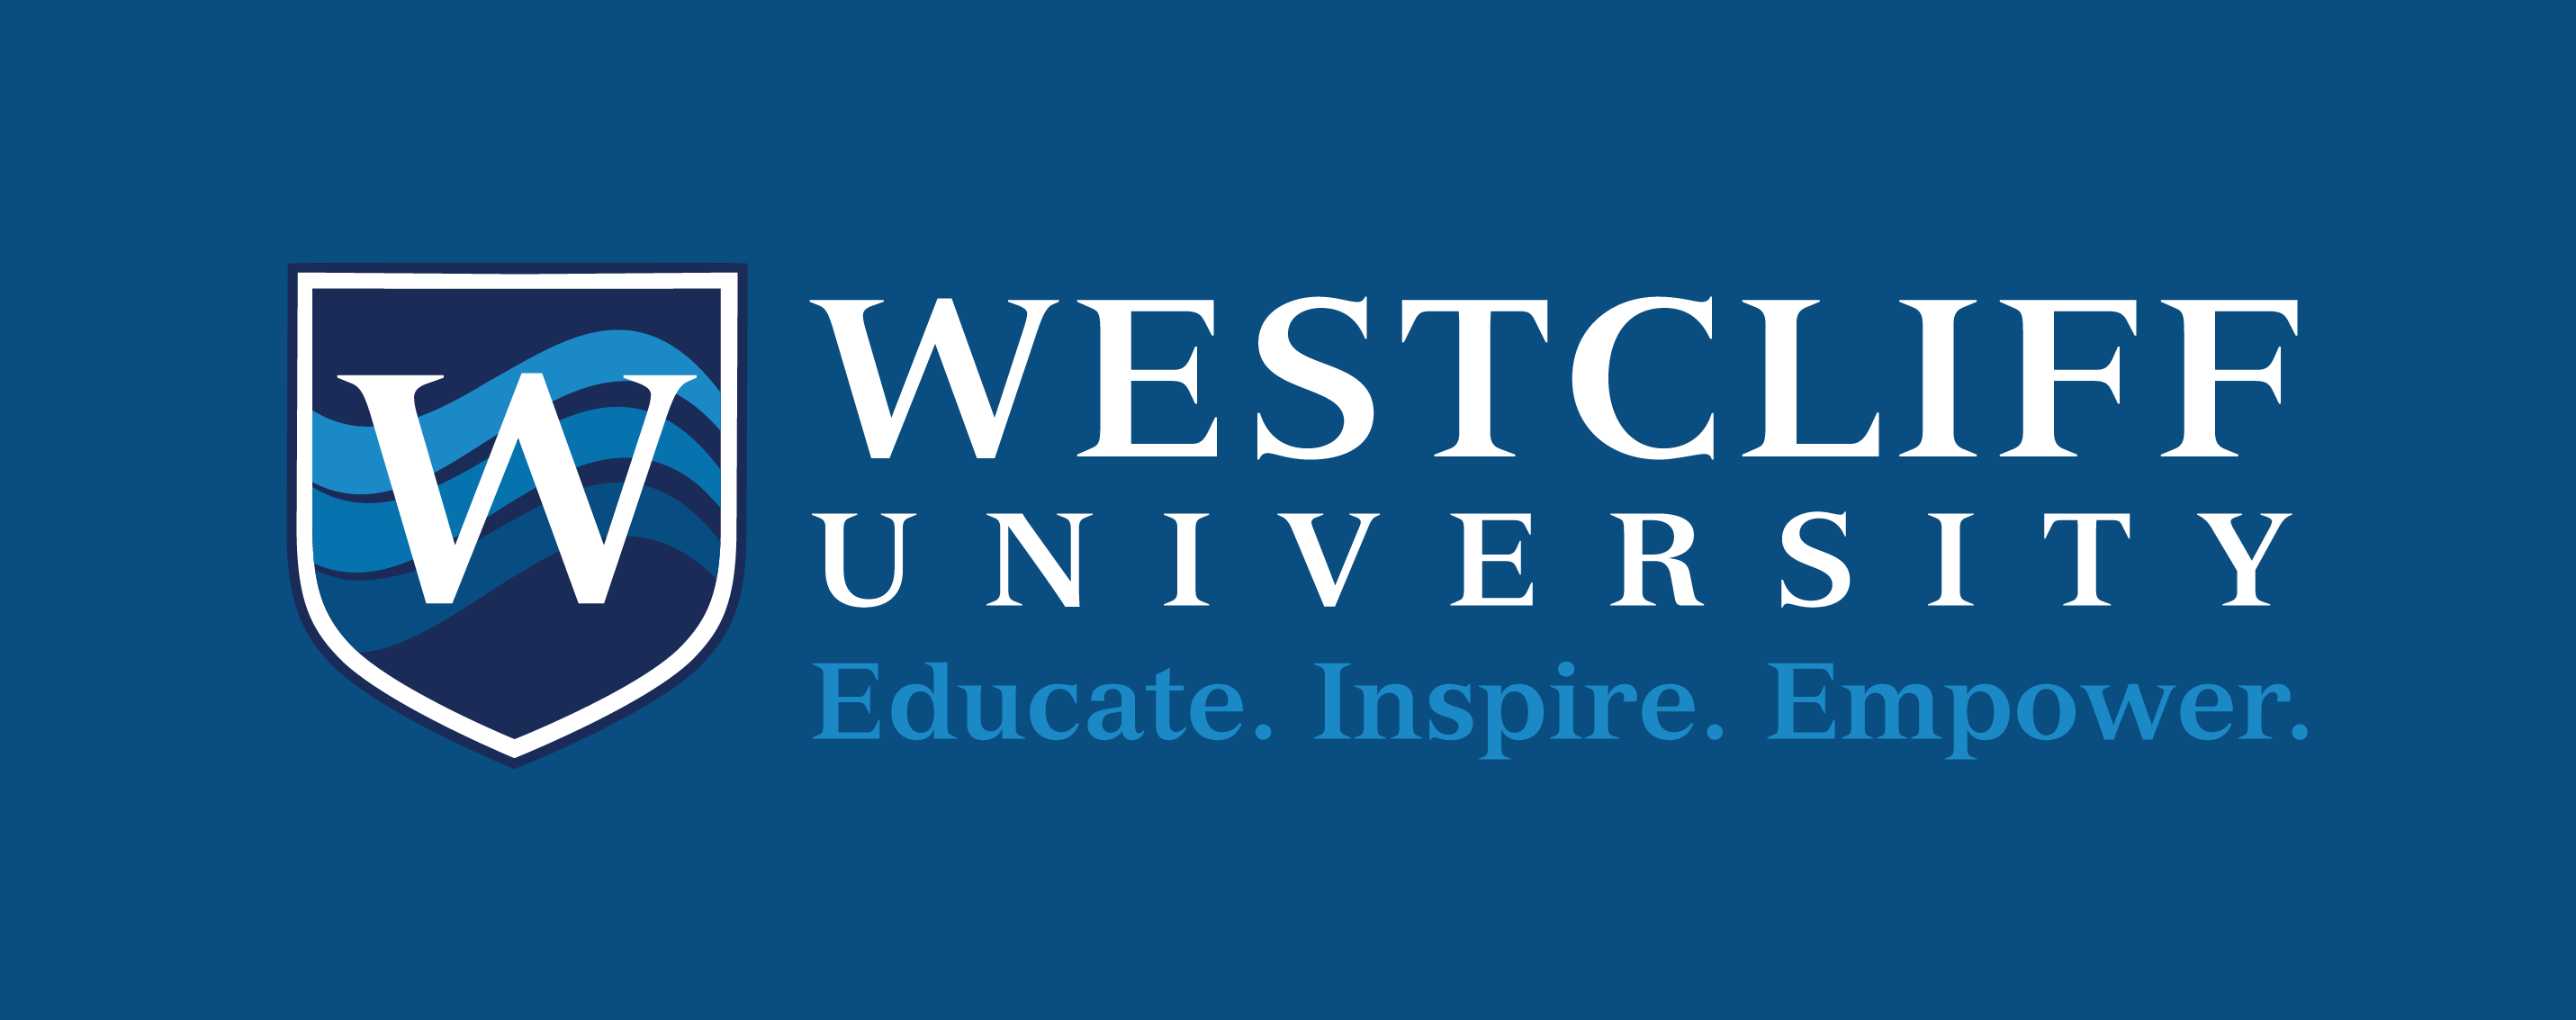 Westcliff University Company Logo